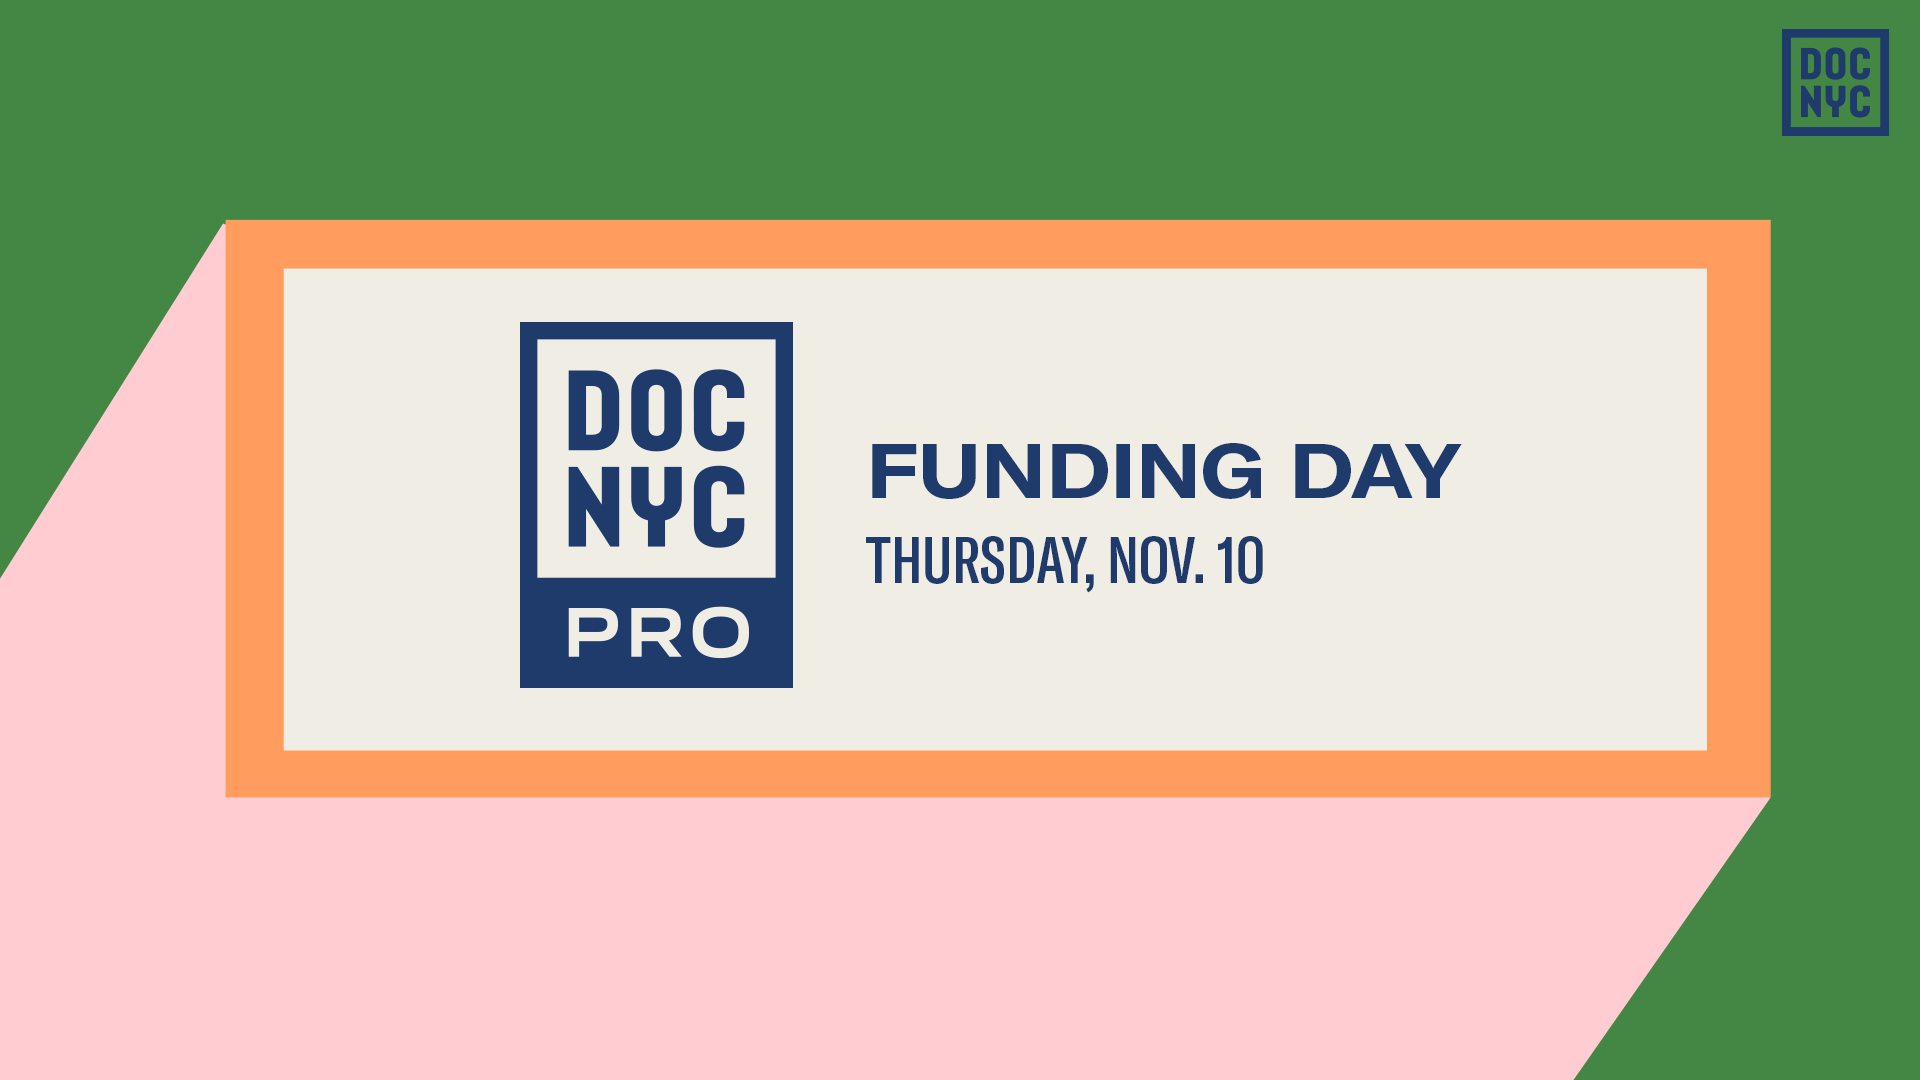 Funding Day (Nov. 10)